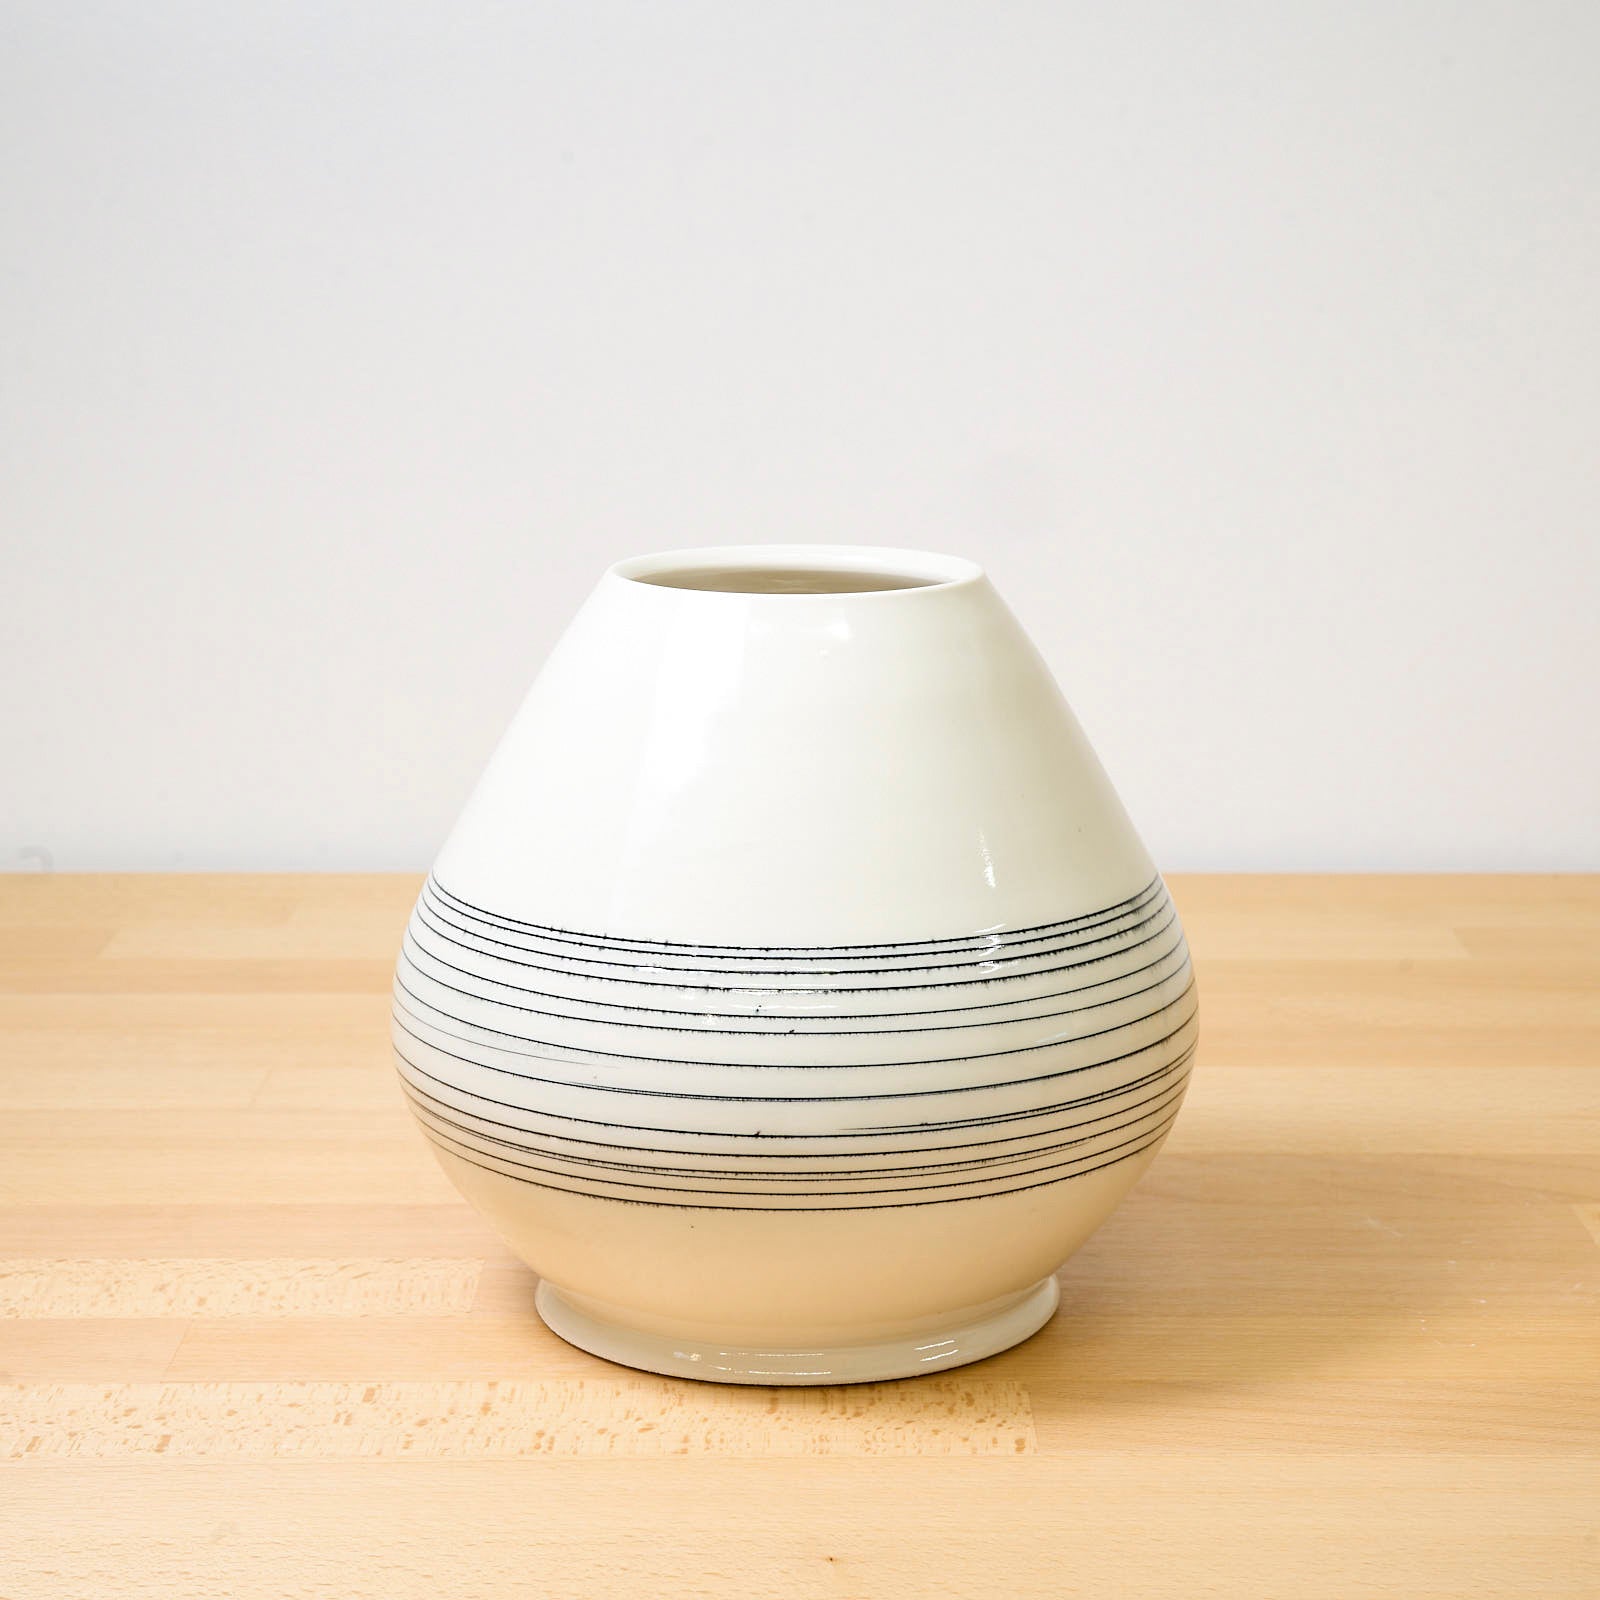 Ltd. Edition Vase 2022-013